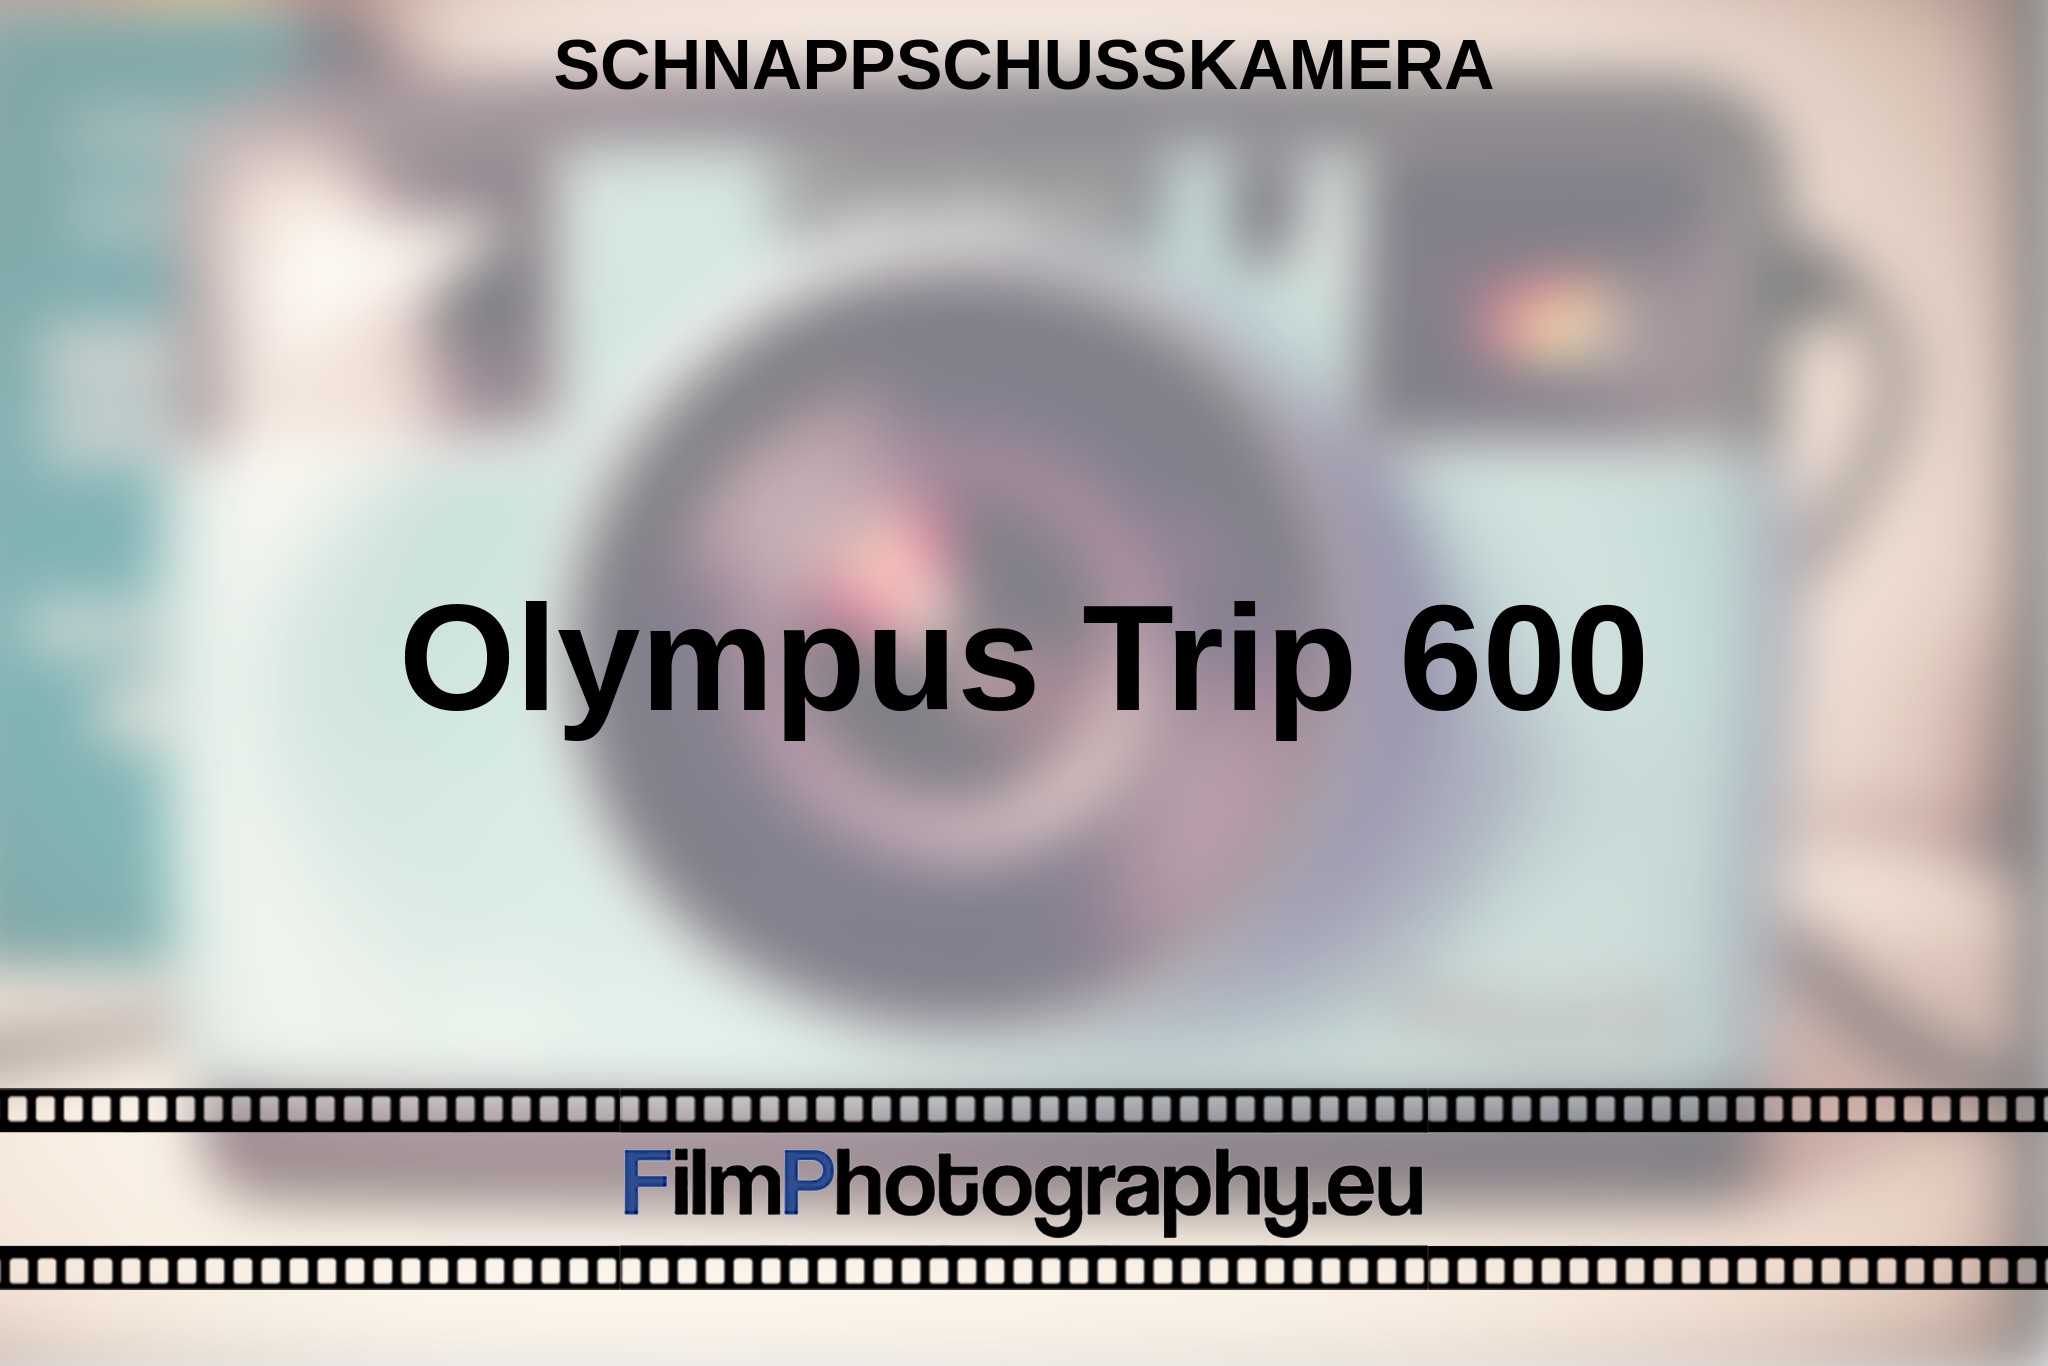 olympus-trip-600-schnappschusskamera-bnv.jpg